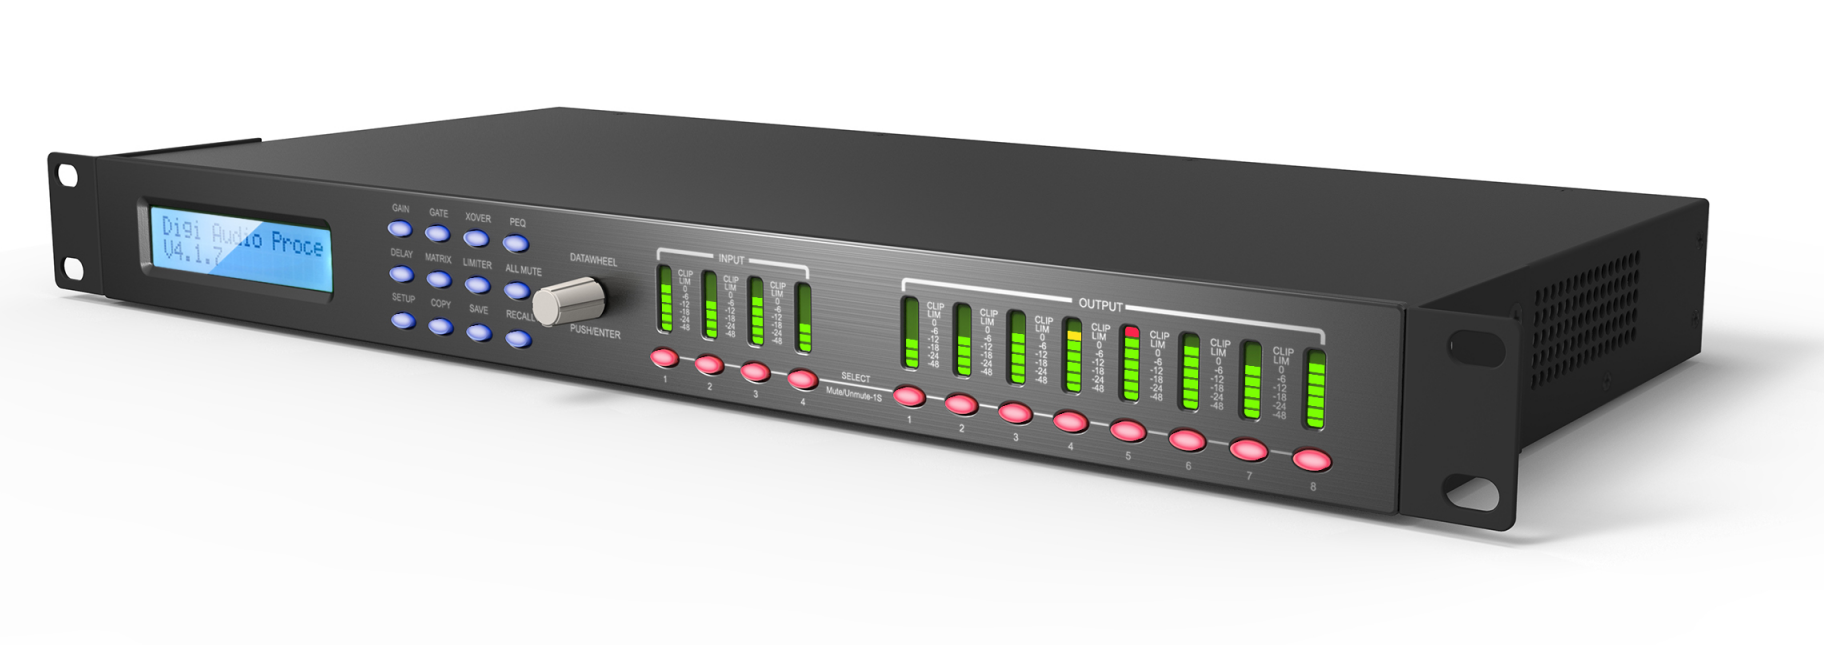 Digital Audio Processor (for Speaker Management) - 4 x 8 Series